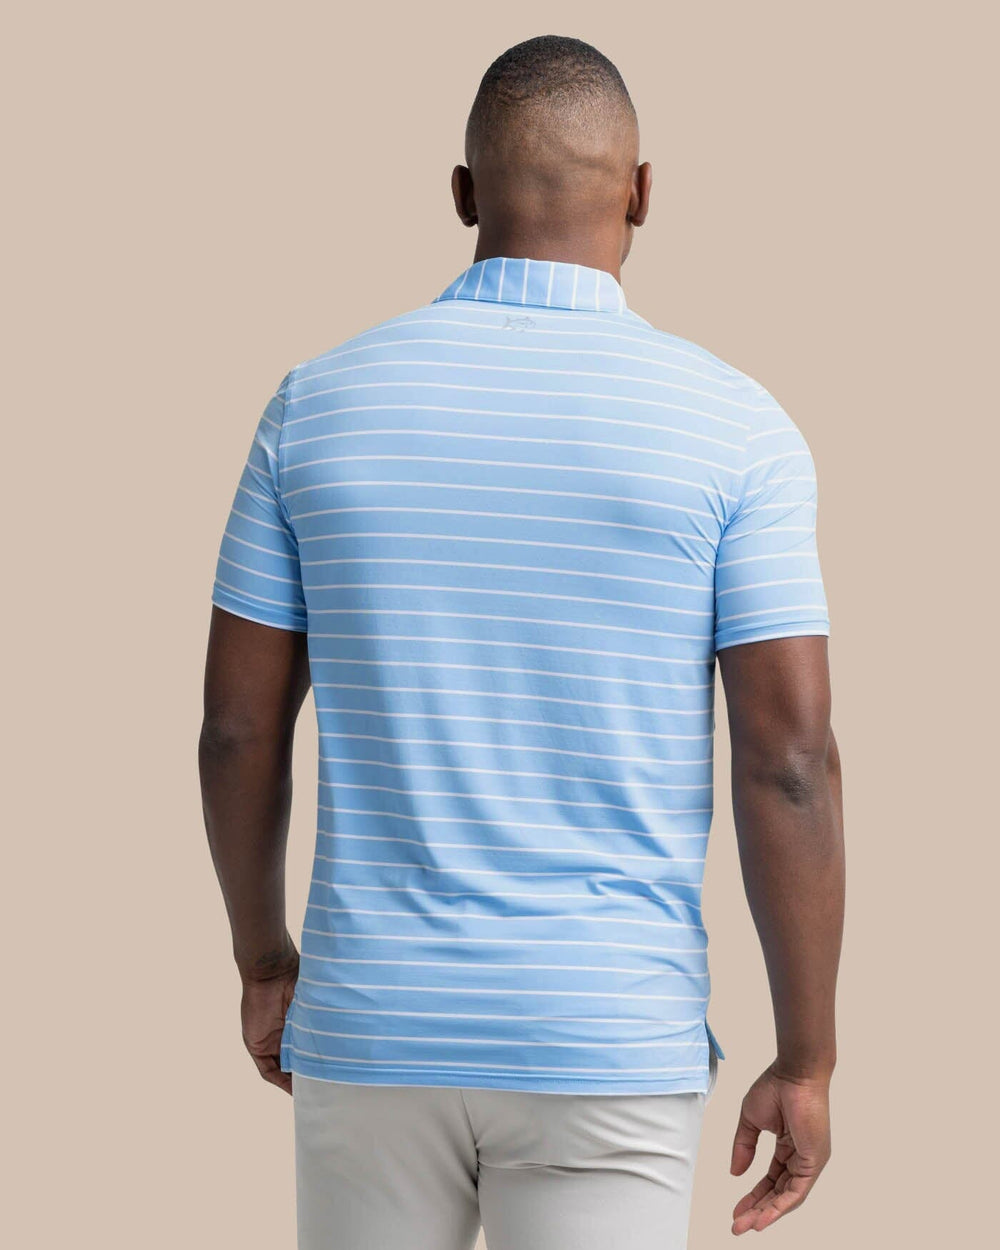 brrr°®eeze Desmond Stripe Polo C_Polo Shirts Southern Tide 